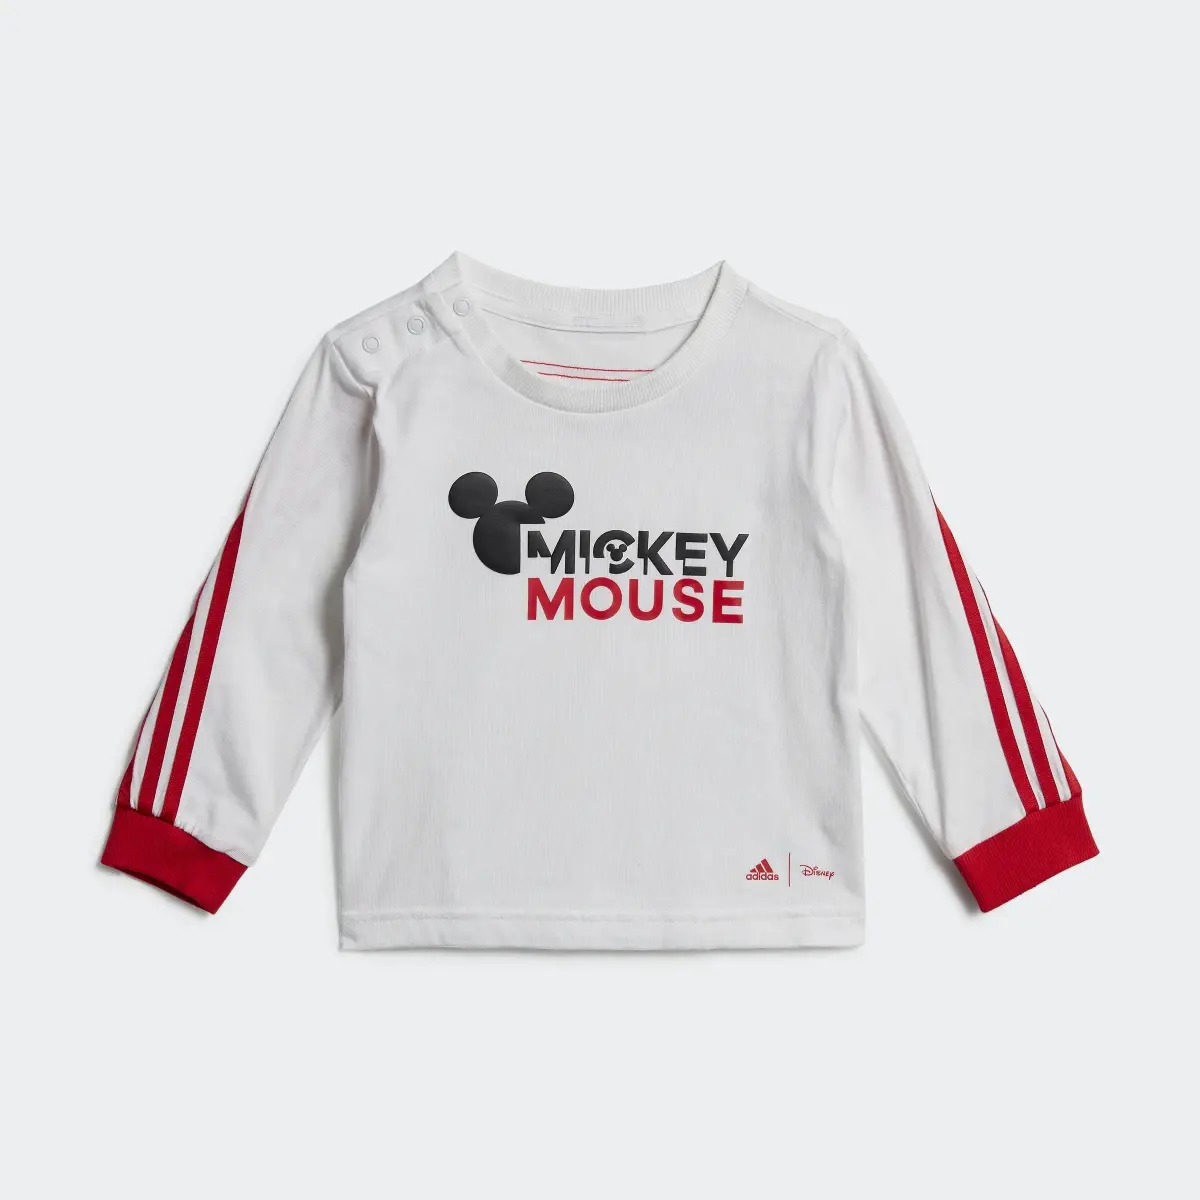 Adidas x Disney Mickey Mouse Bodysuit Set. 3